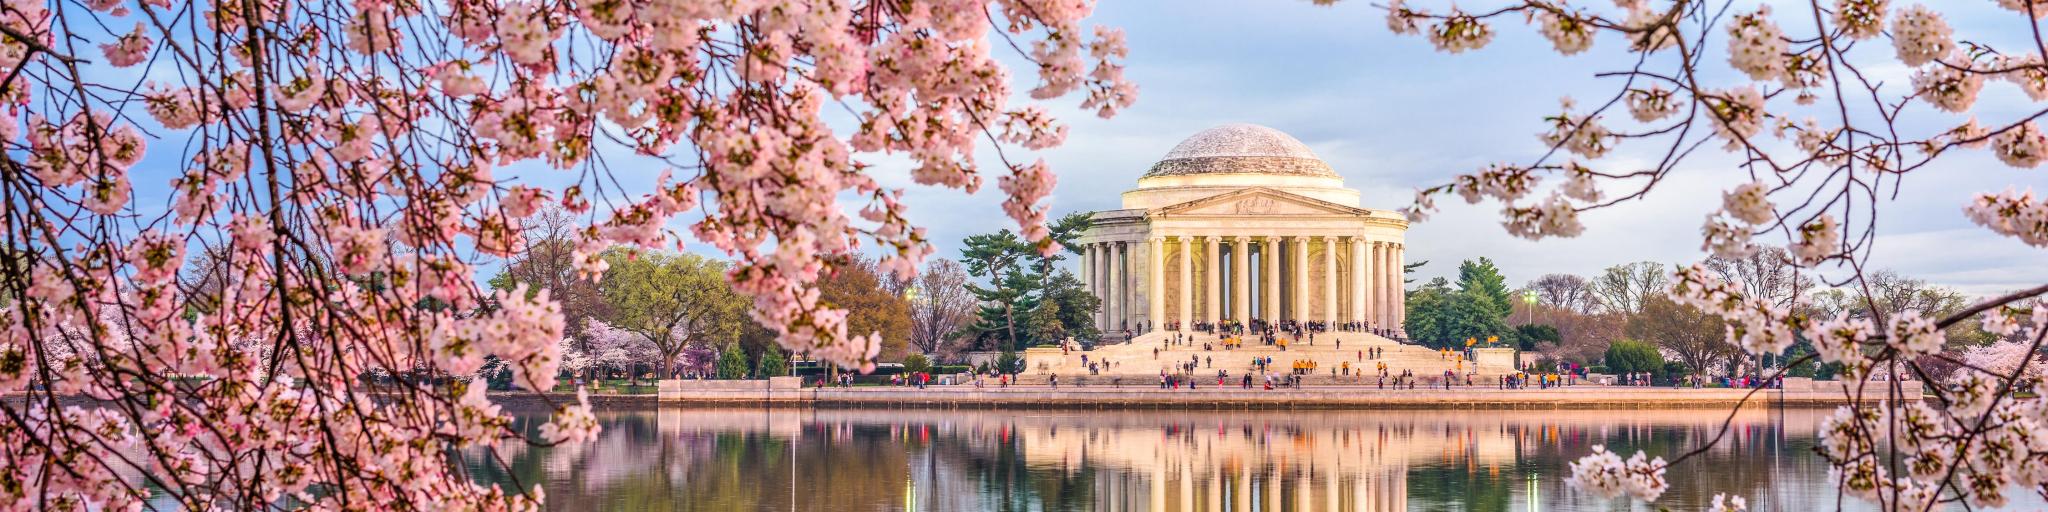 Washington DC, USA in spring season at the Tidal Basin and Jefferson Memorial.